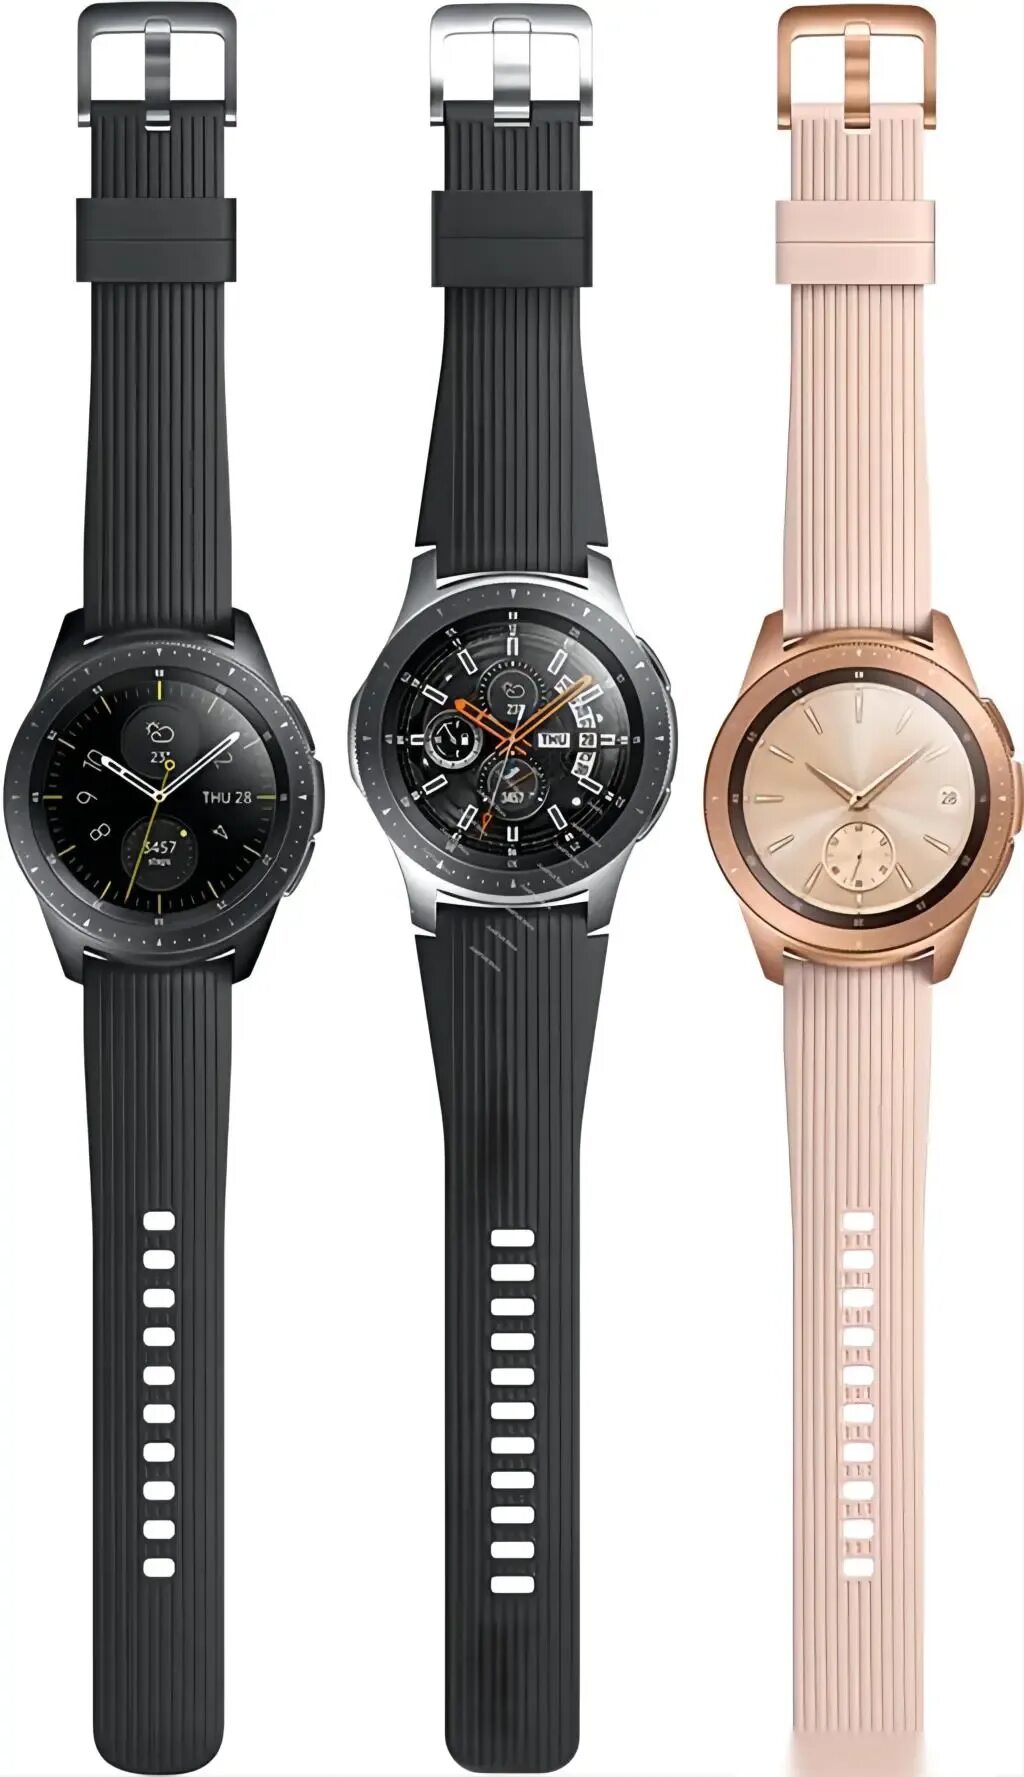 Samsung Galaxy watch r810. Samsung watch 42mm. Samsung Galaxy watch SM-r810. Samsung Galaxy watch 4 46mm. Galaxy watch 42mm classic